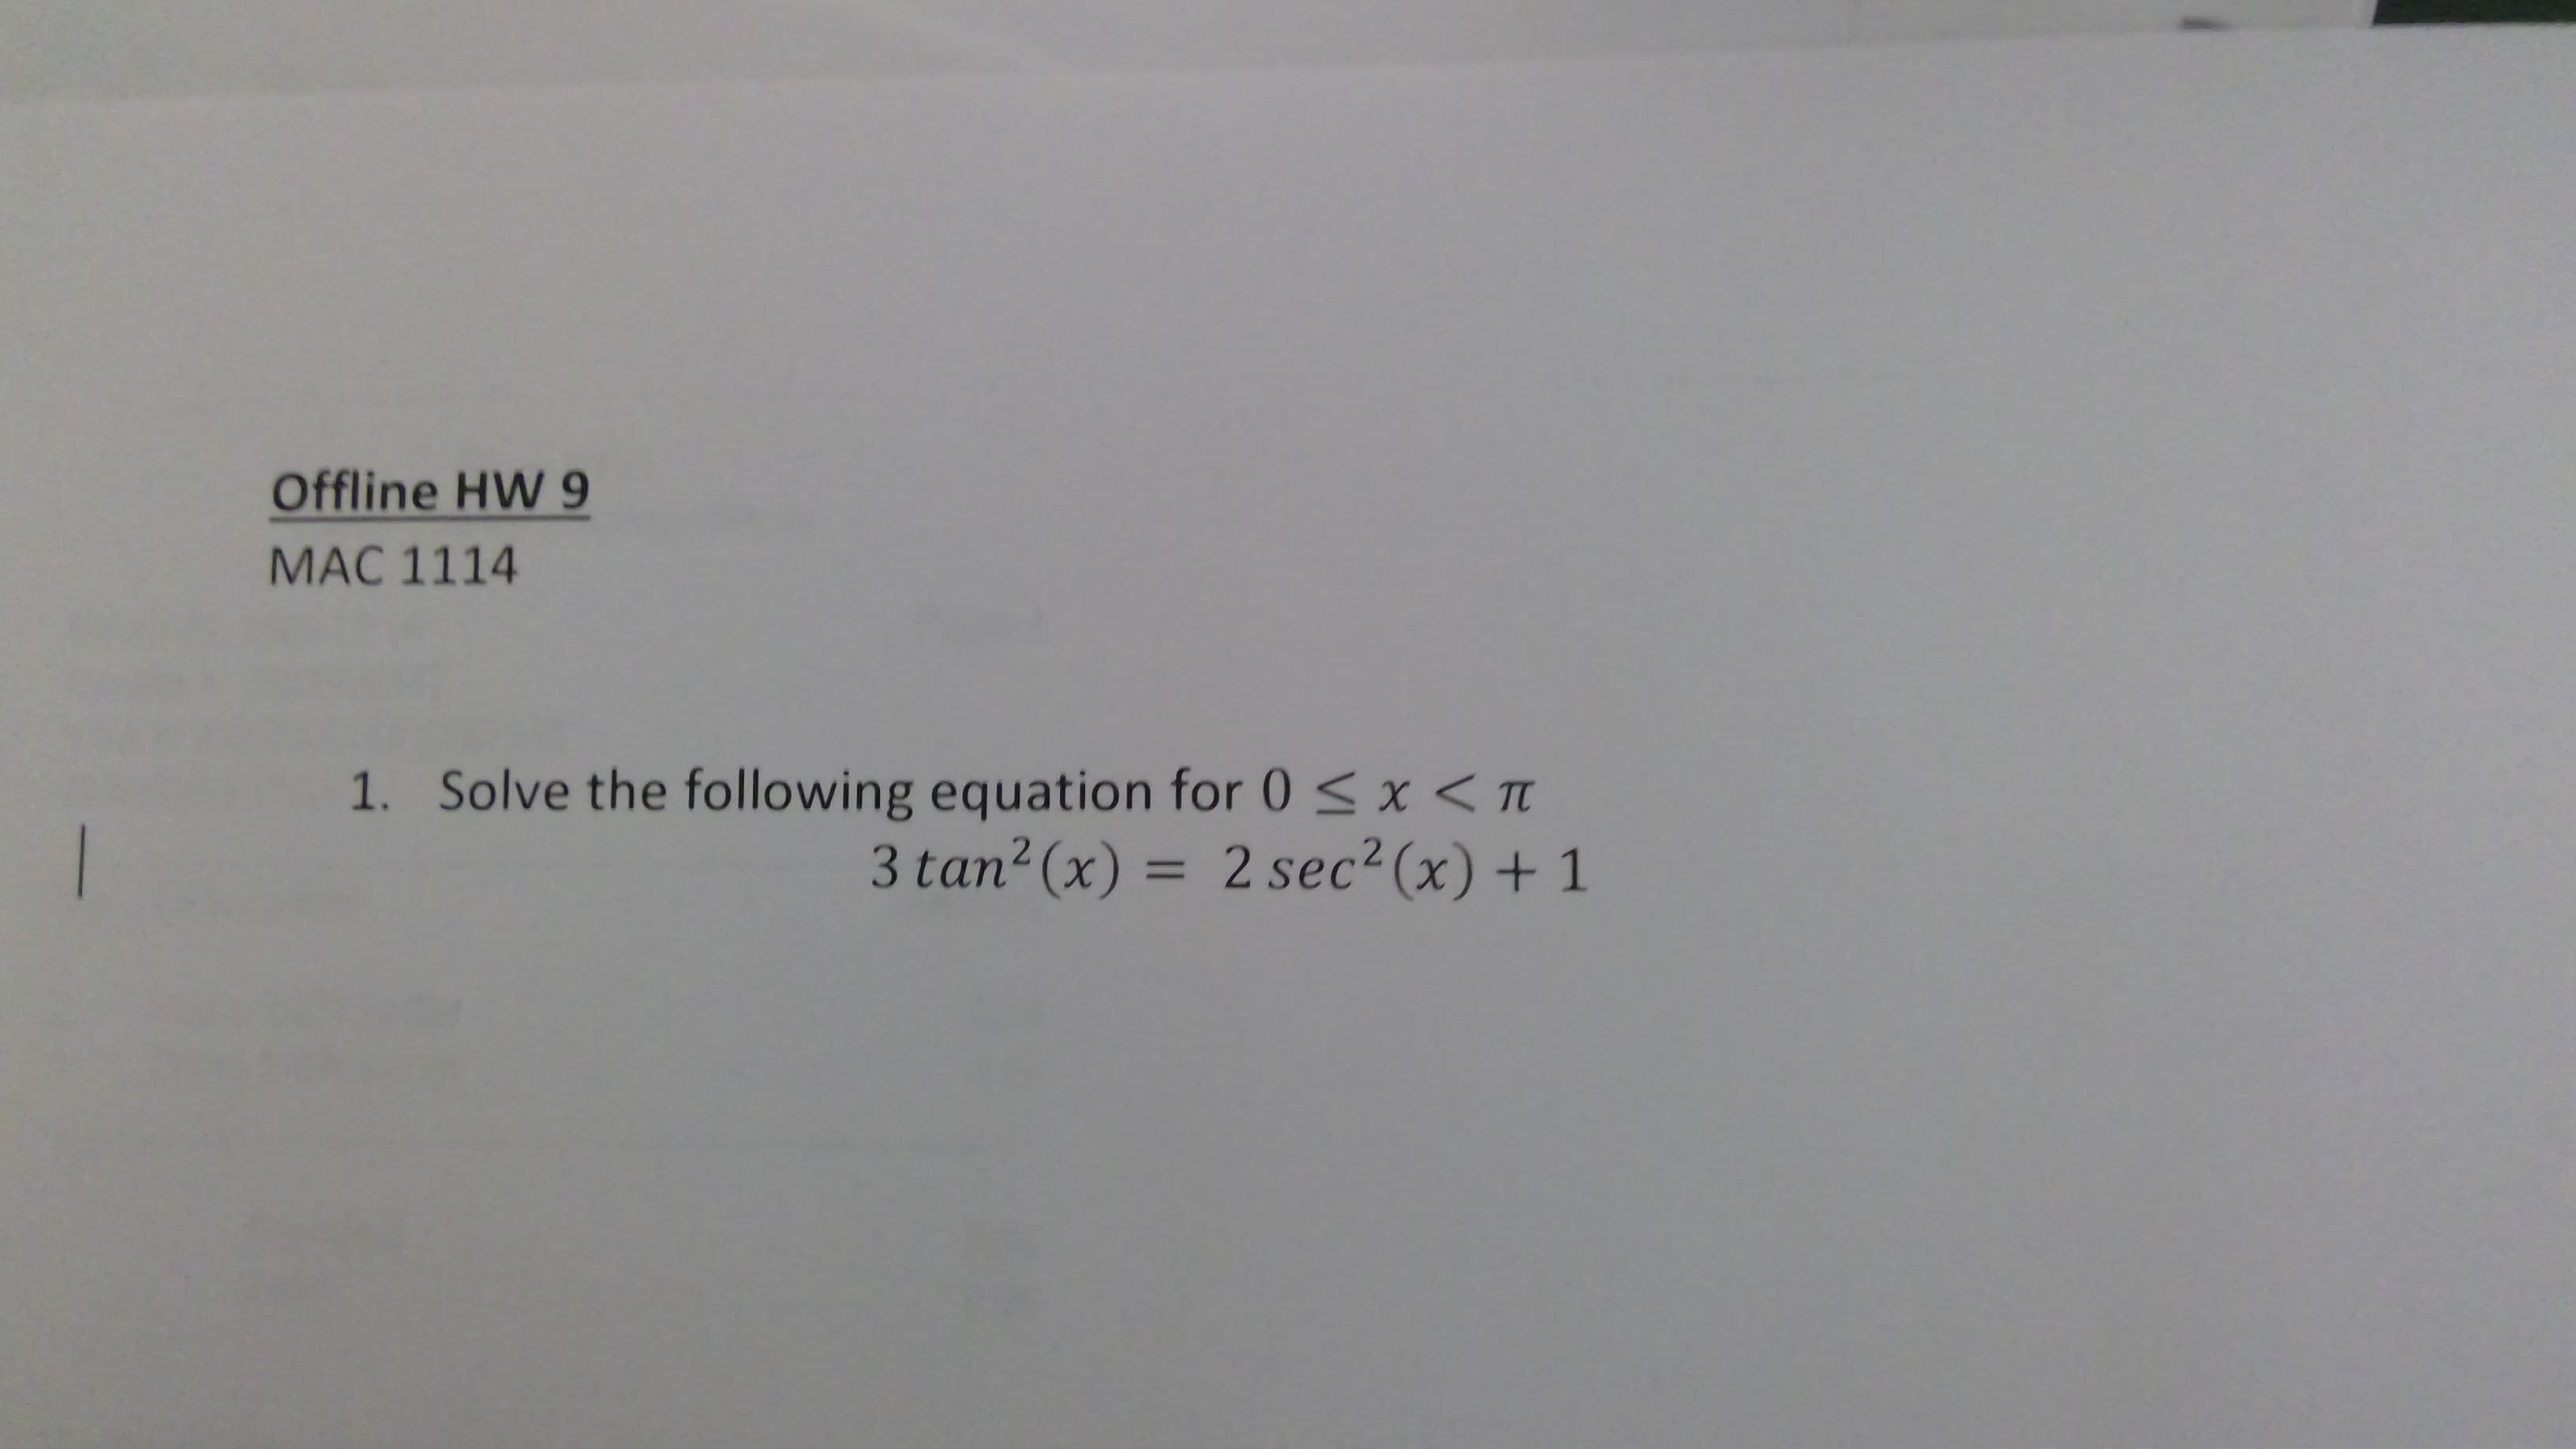 Offline HW 9
MAC 1114
1. Solve the following equation for 0 < x < TI
3 tan² (x) = 2 sec²(x) + 1
%3D
